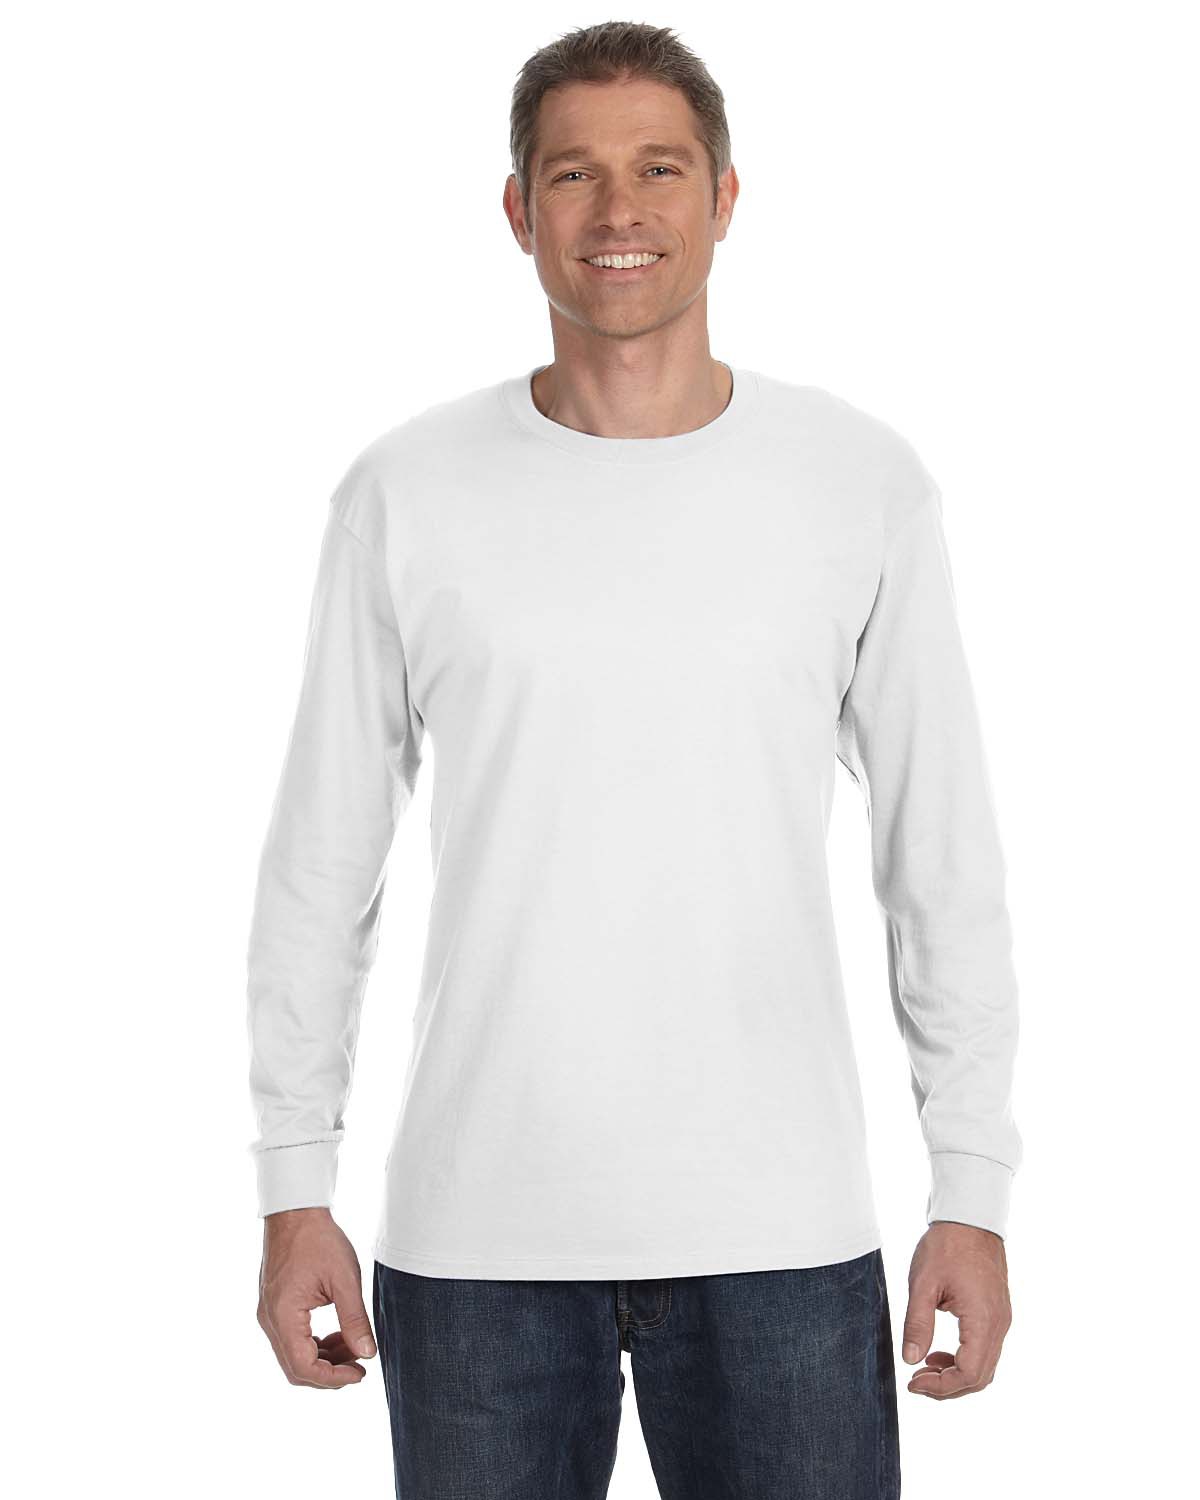 29L Jerzees Adult 5.6 oz. DRI-POWER® ACTIVE Long-Sleeve T-Shirt